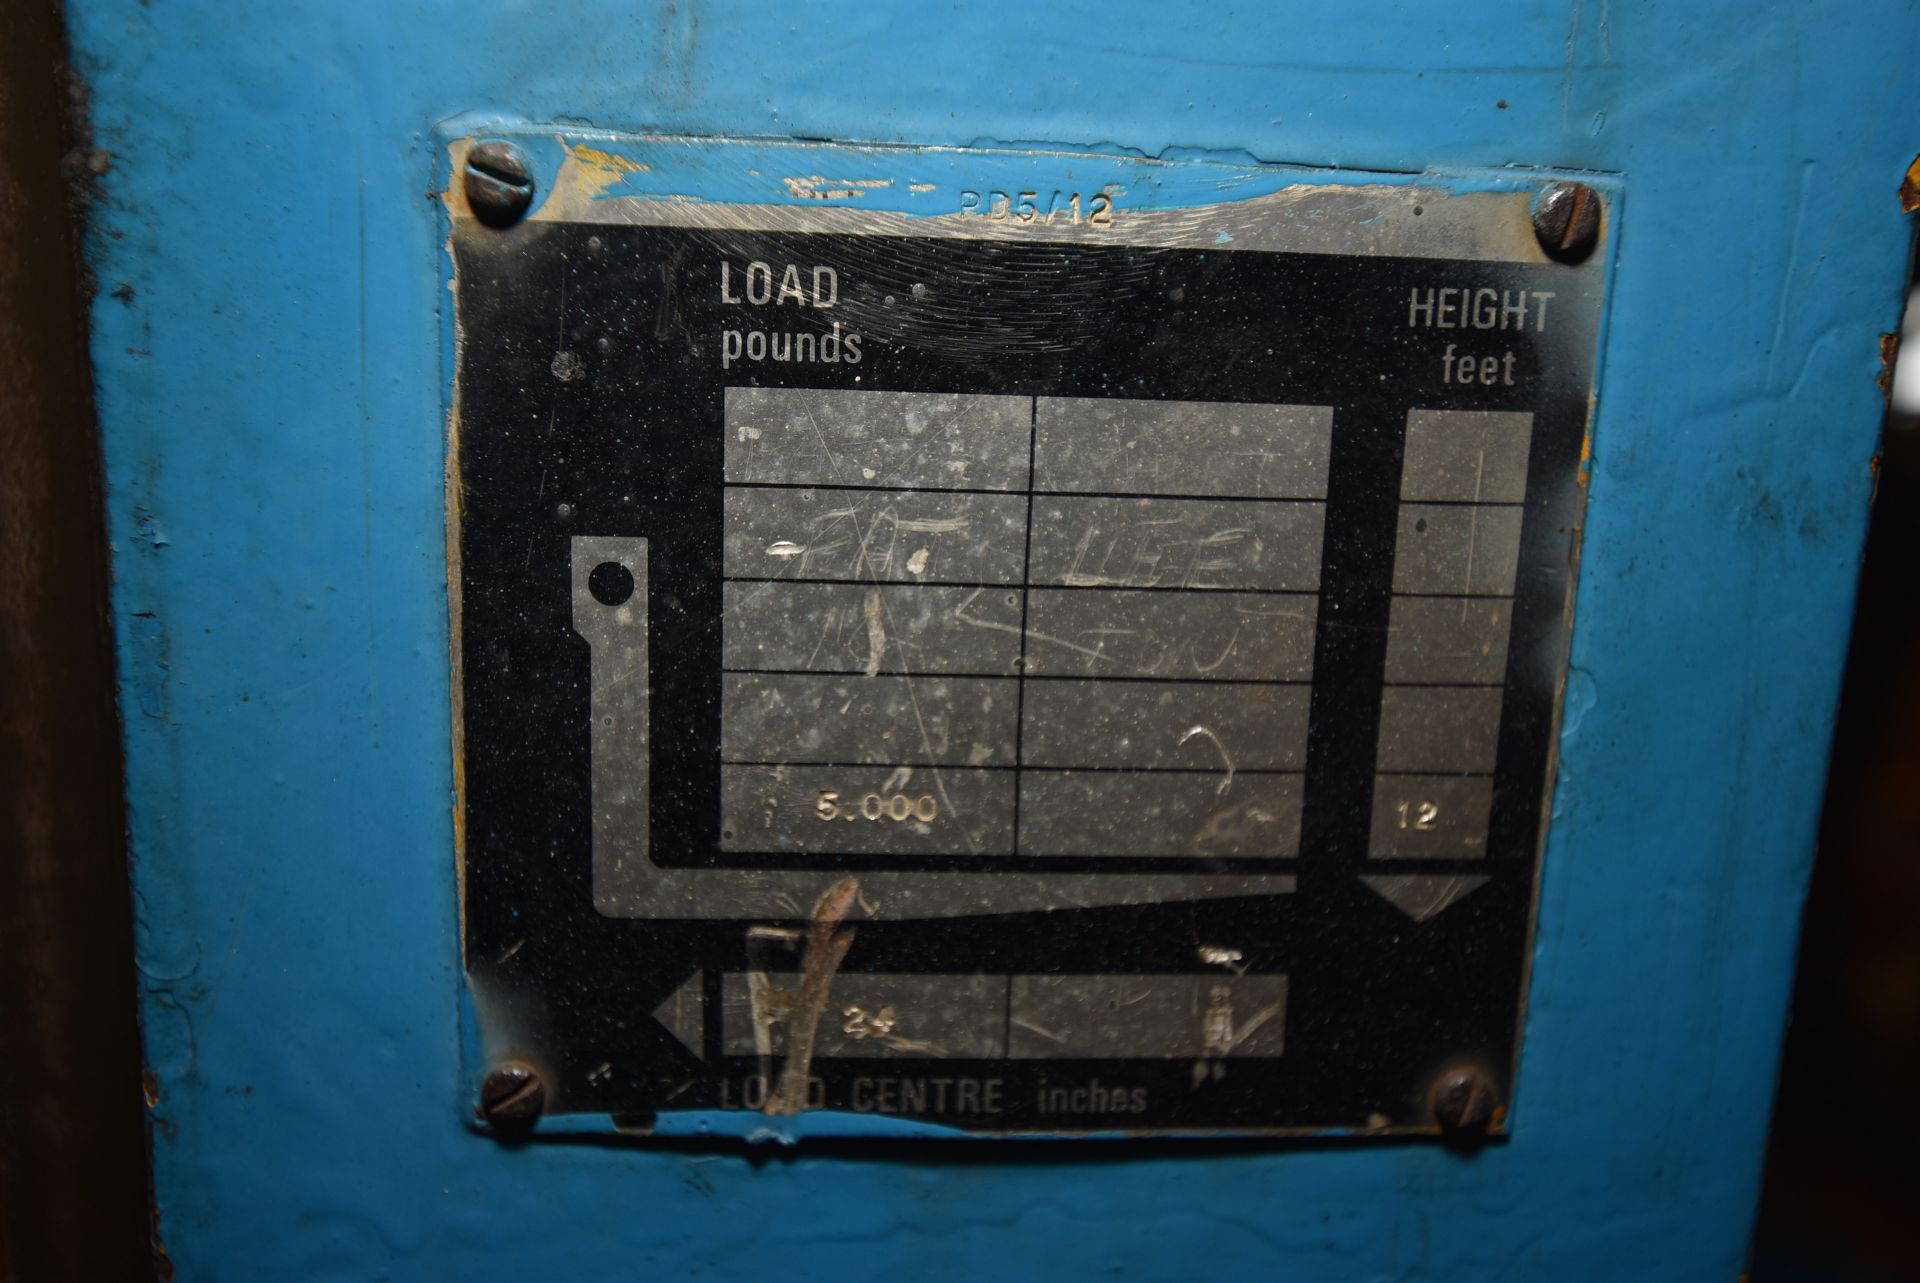 Boss PD5/14 DIESEL ENGINE FORK LIFT TRUCK, serial - Image 7 of 7